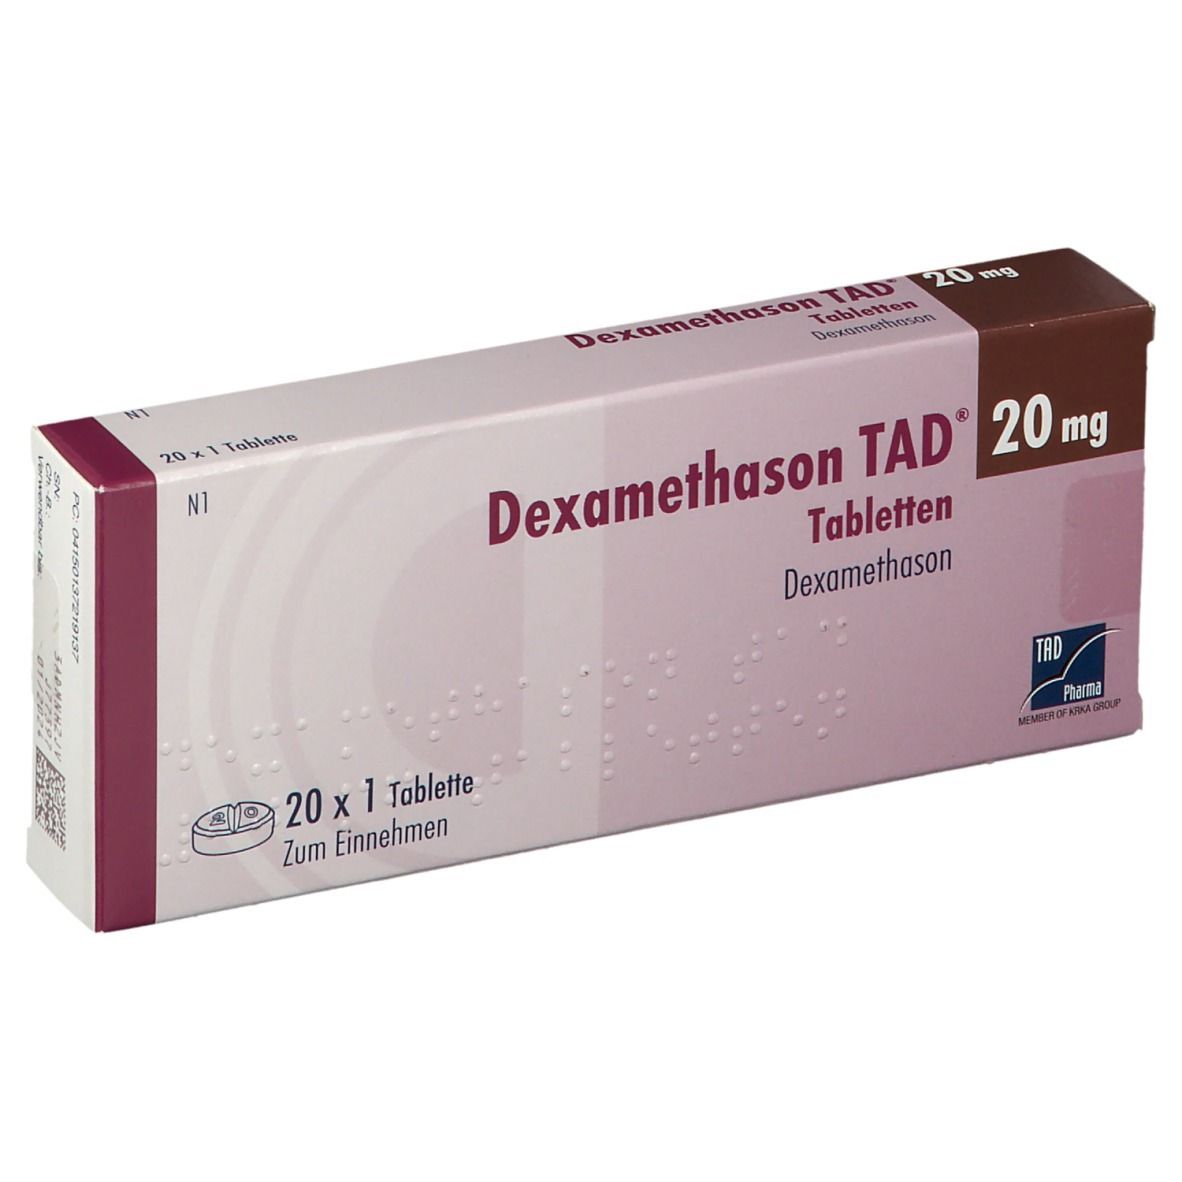 Dexamethason TAD® 20 mg